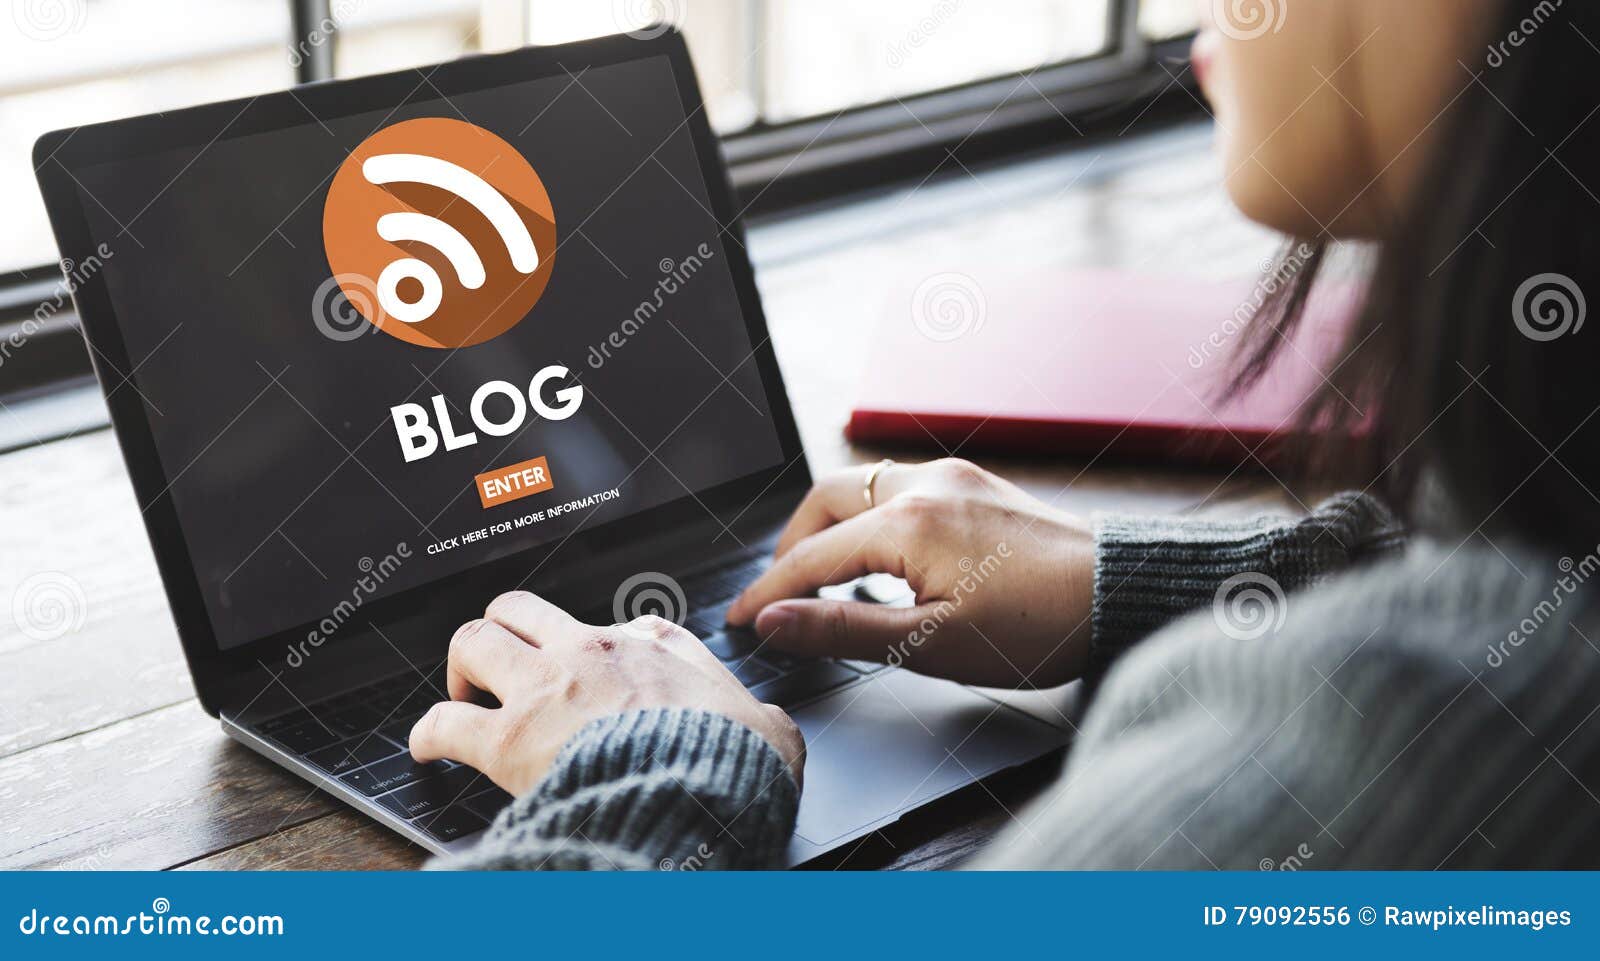 social media blog articles online internet concept